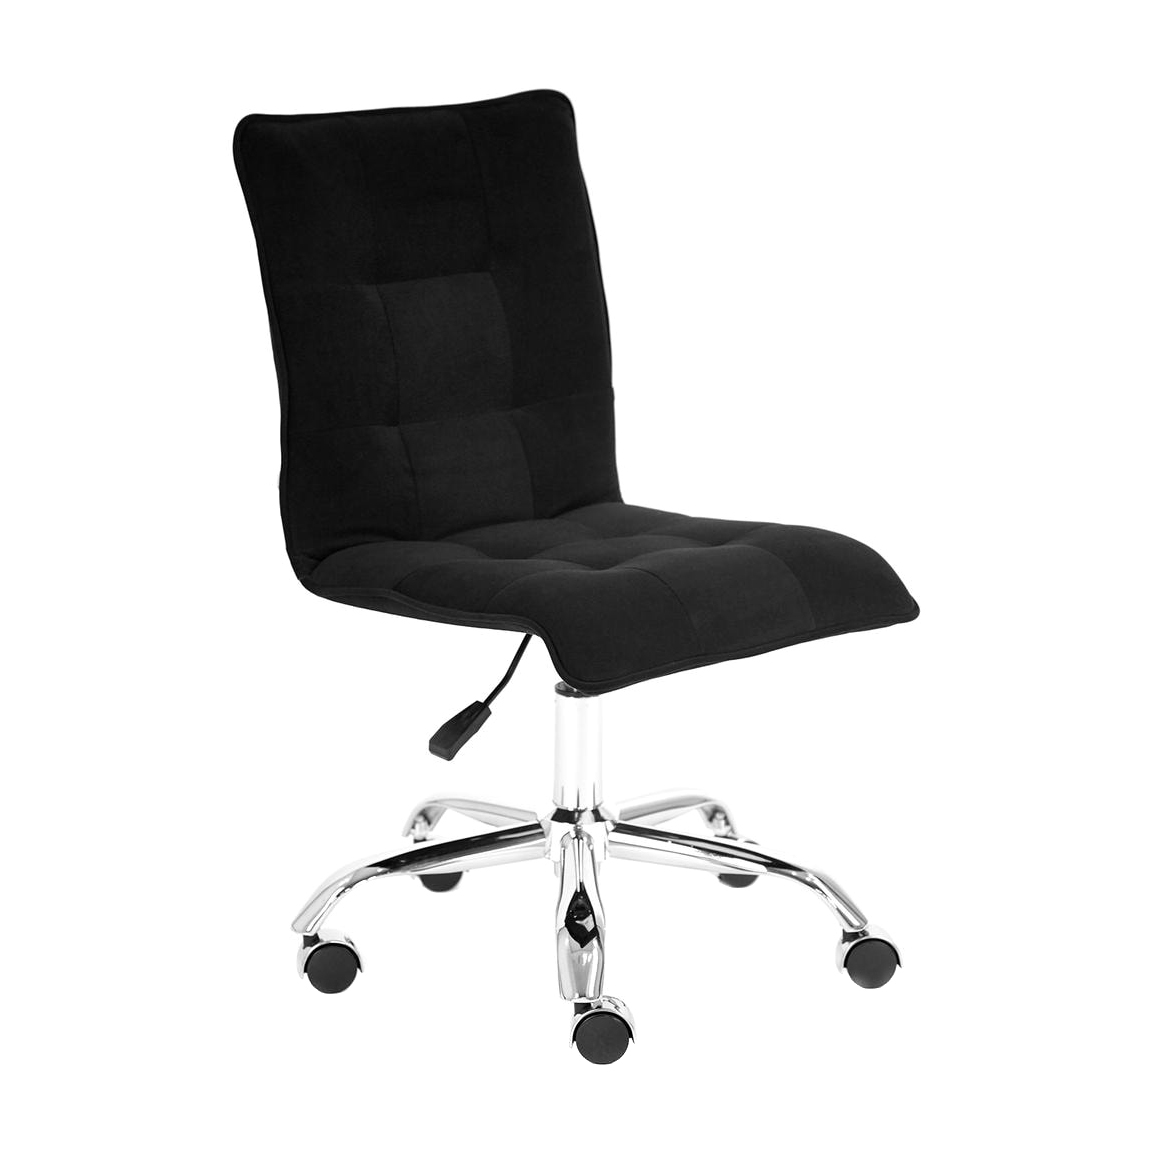 Кресло офисное TC до 100 кг 96х45х40 см черный кресло офисное tc до 100 кг 96х45х40 см оливковый